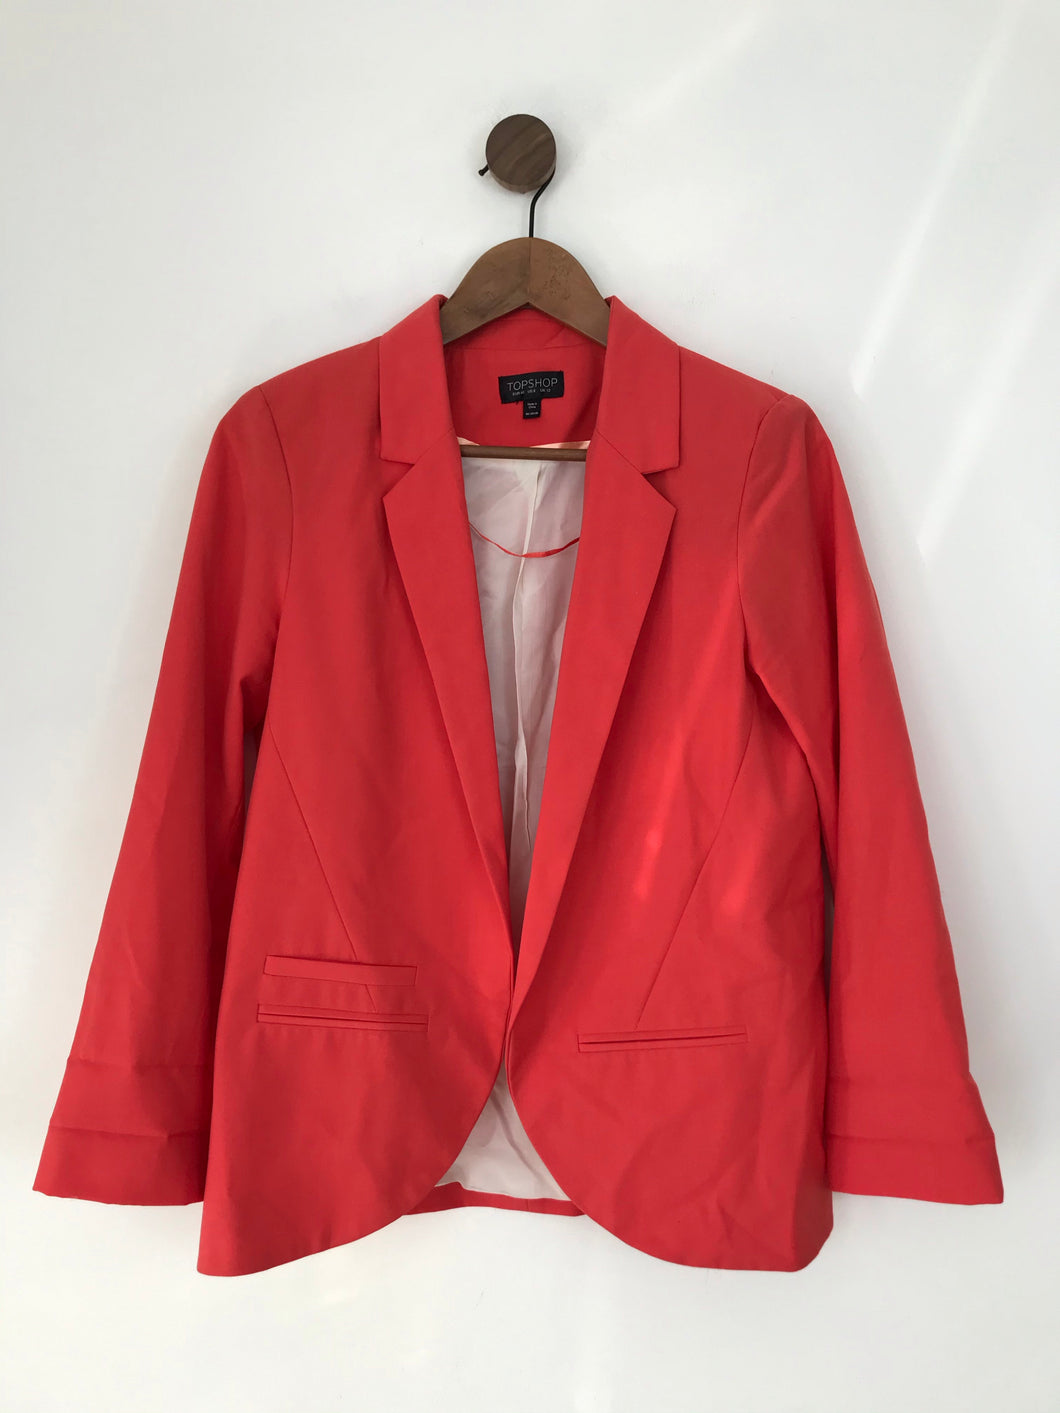 Topshop Women's Blazer Jacket | UK12 | Pink